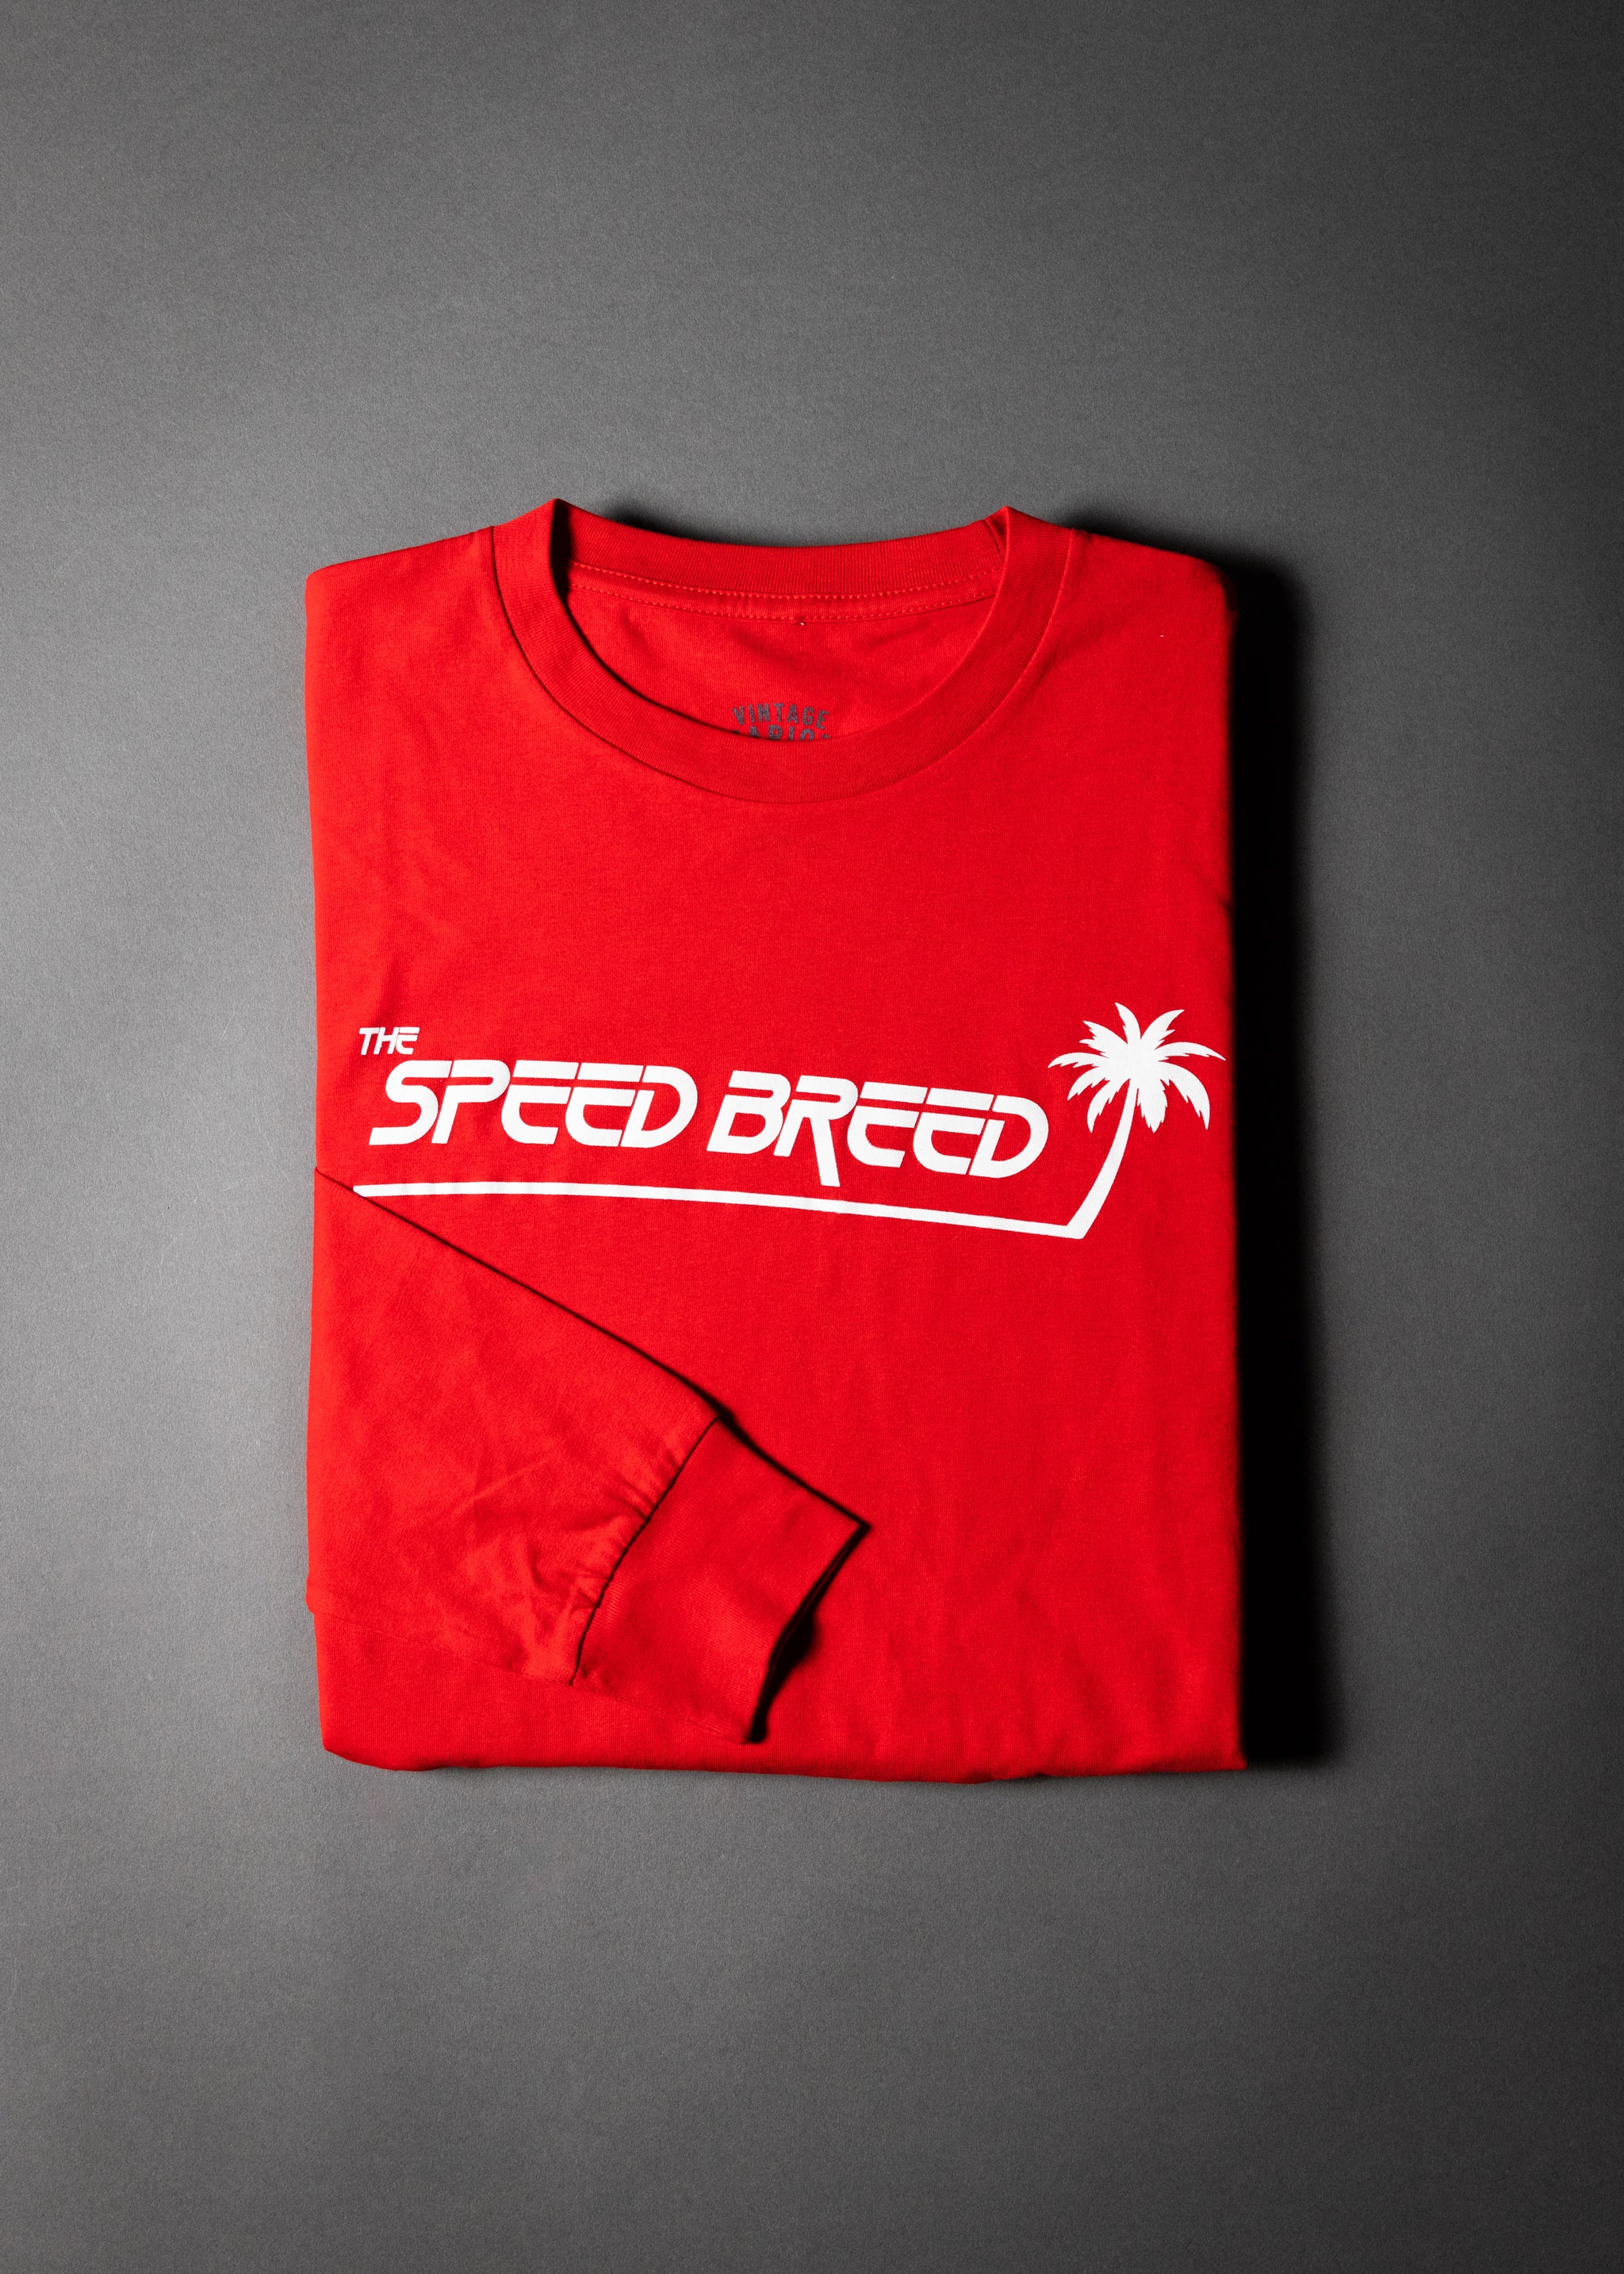 Palm Tree Speed Breed Long Sleeve Tee (Team Red)